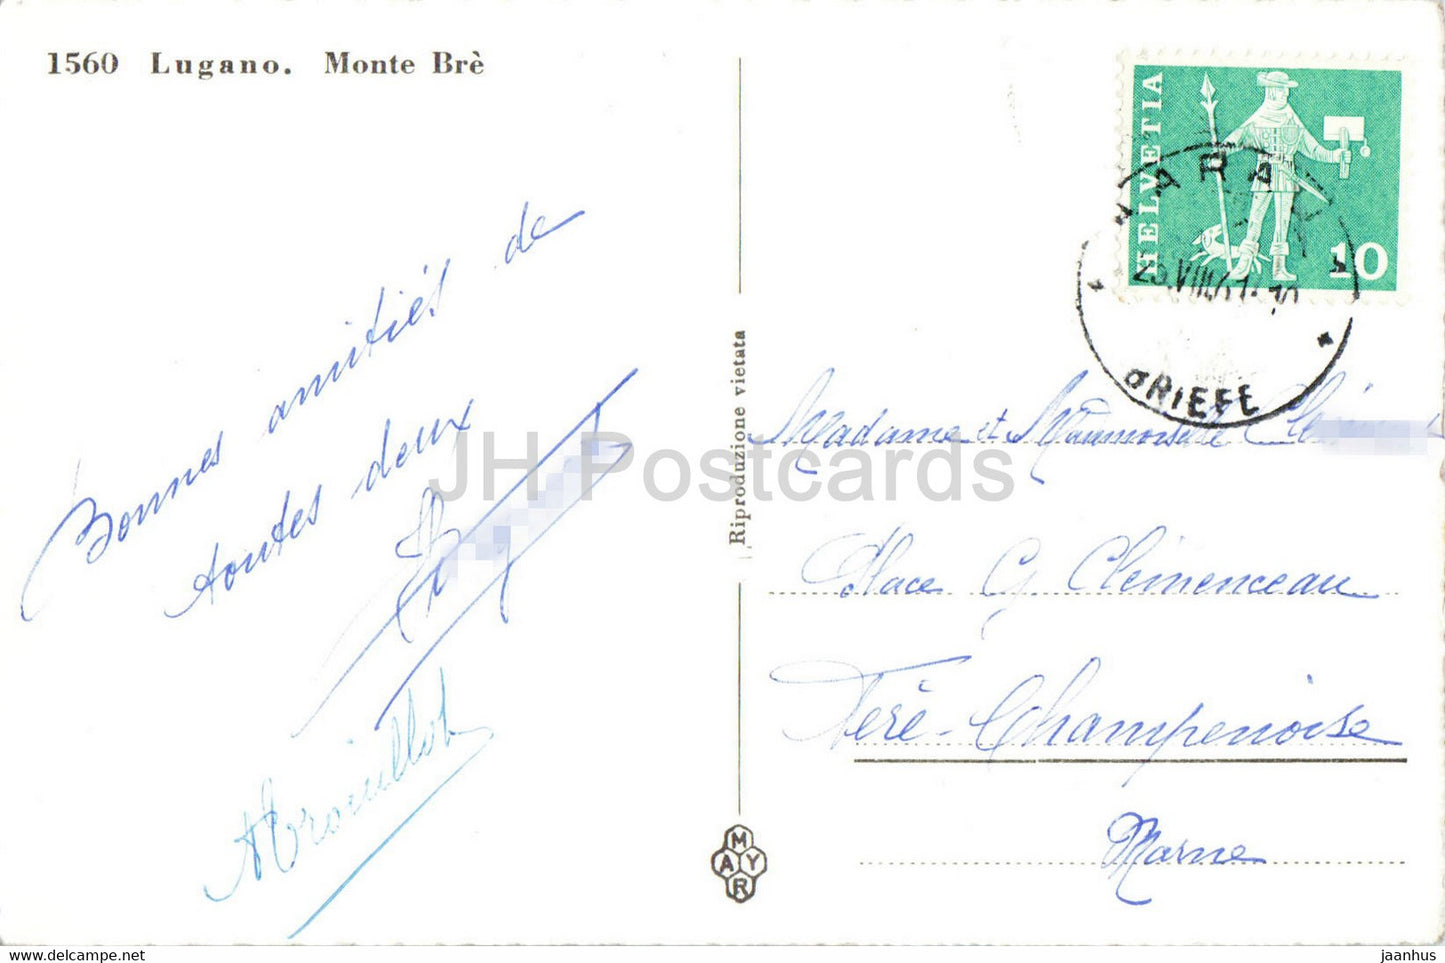 Lugano - Monte Bre - 1560 - old postcard - 1961 - Switzerland - used